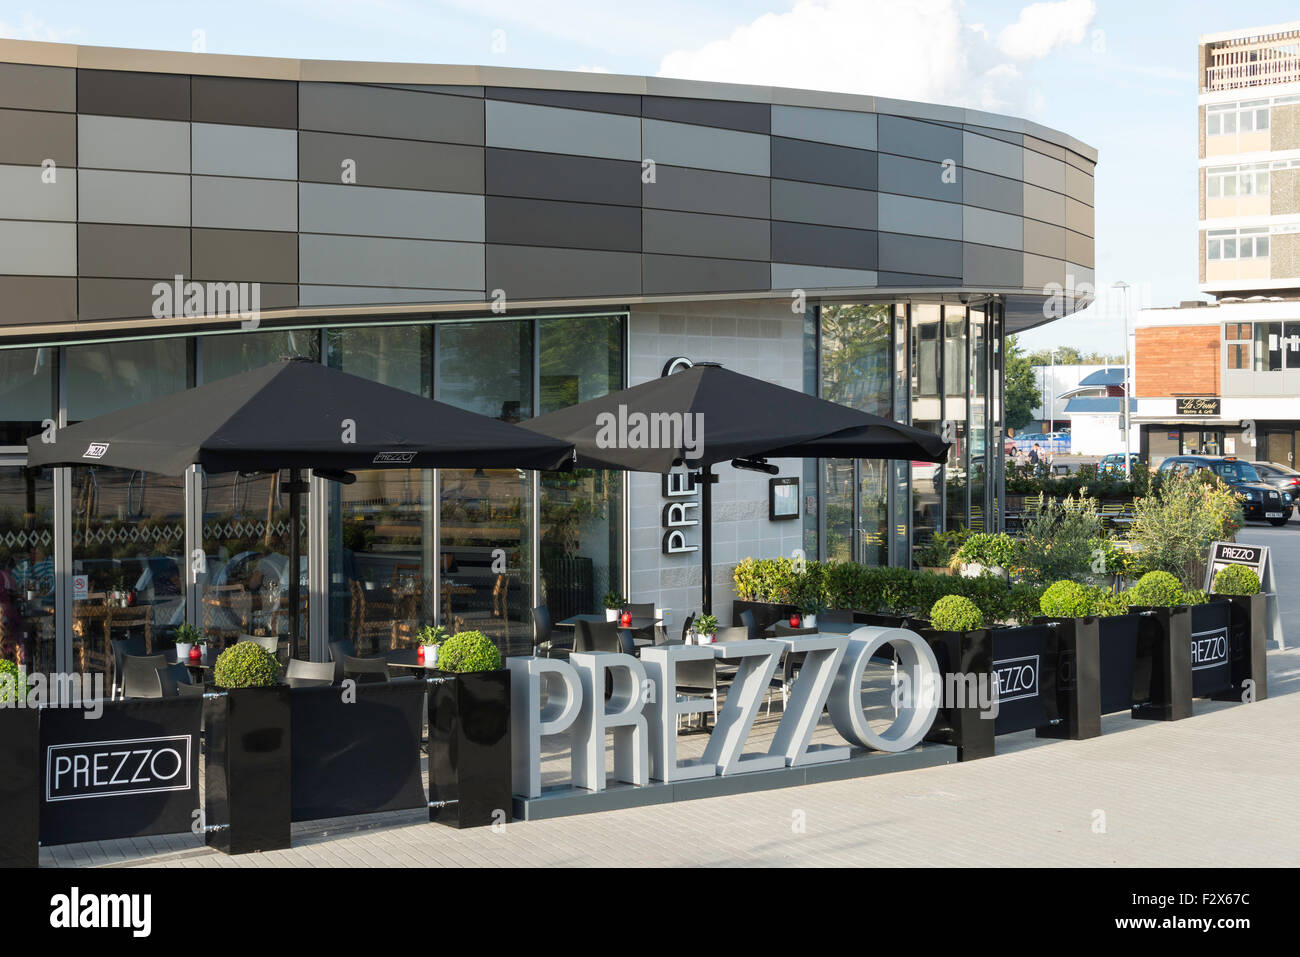 Prezzo Italian Restaurant, James Ashworth Square, Corby, Northamptonshire, England, United Kingdom Stock Photo